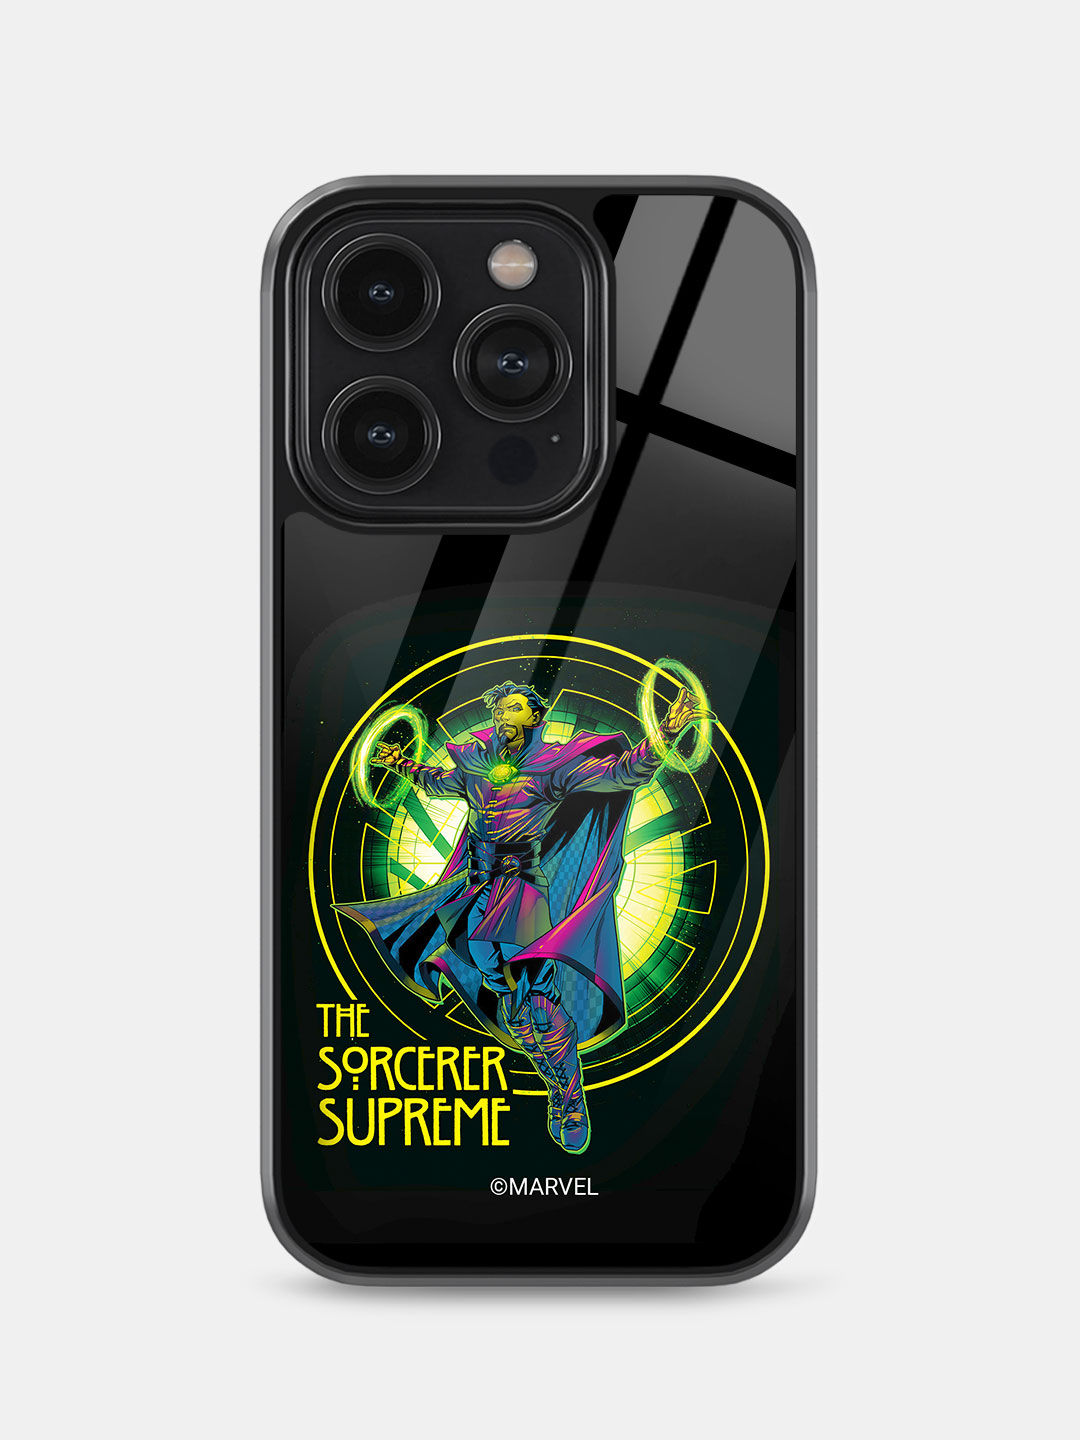 Supreme iPhone 12 Pro Max Cases